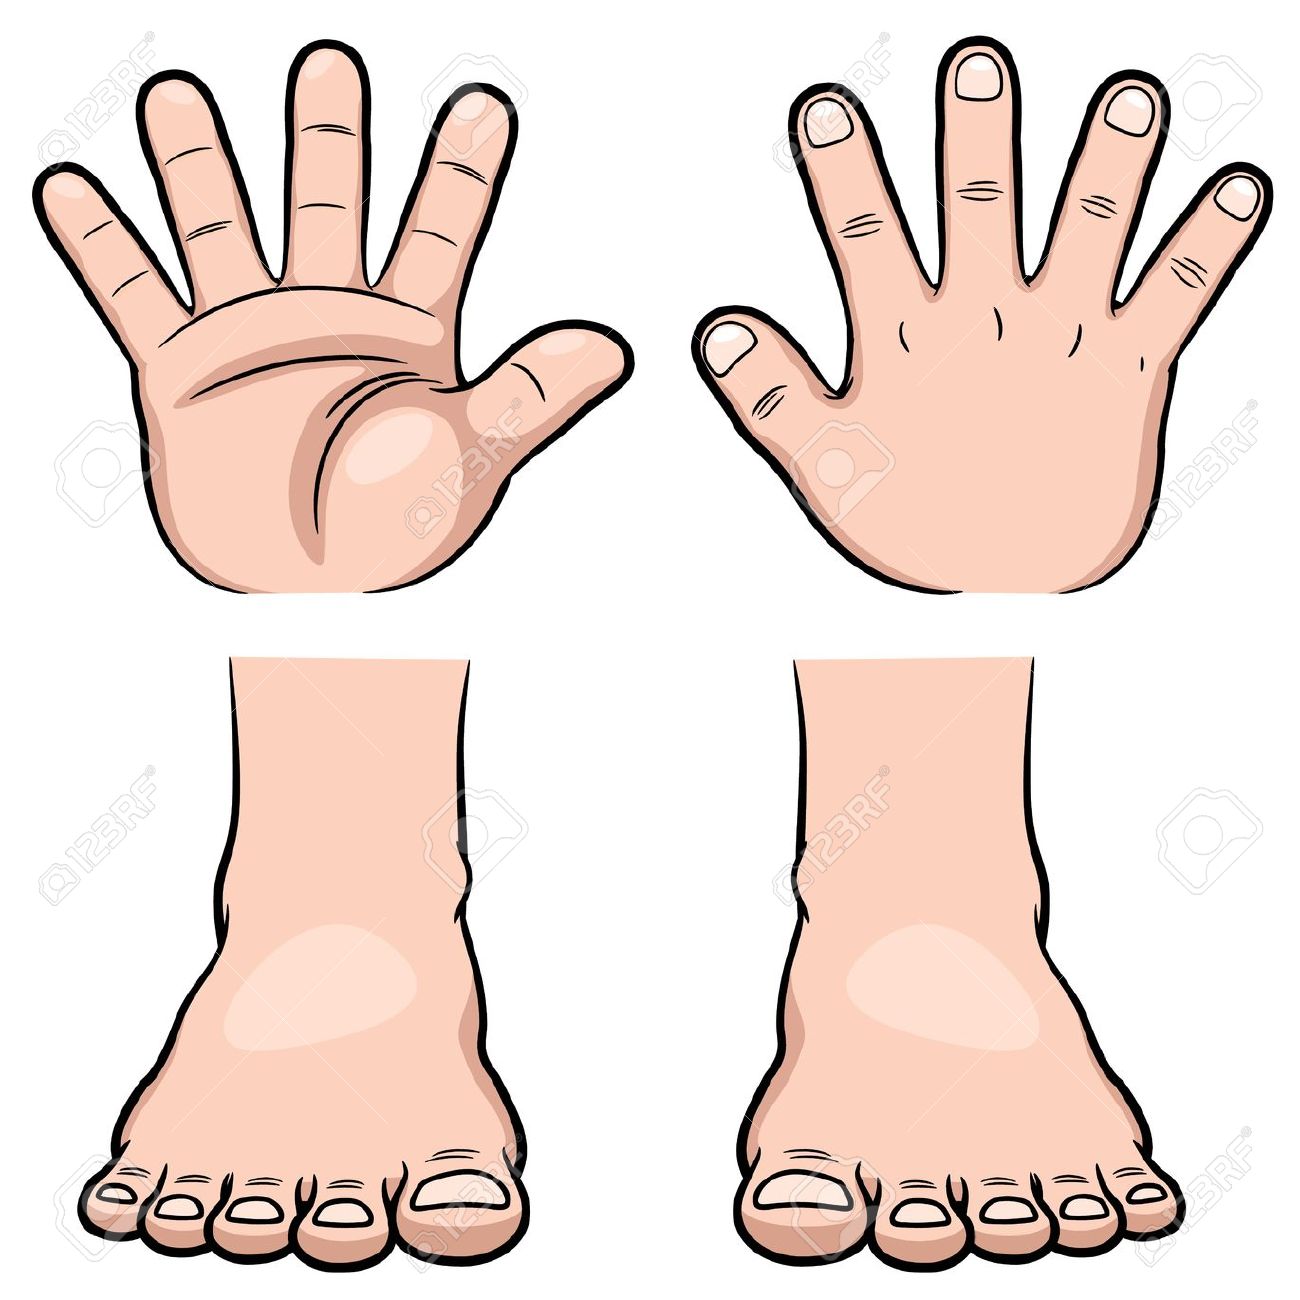 Handprint clipart hand foot. Hands and feet free